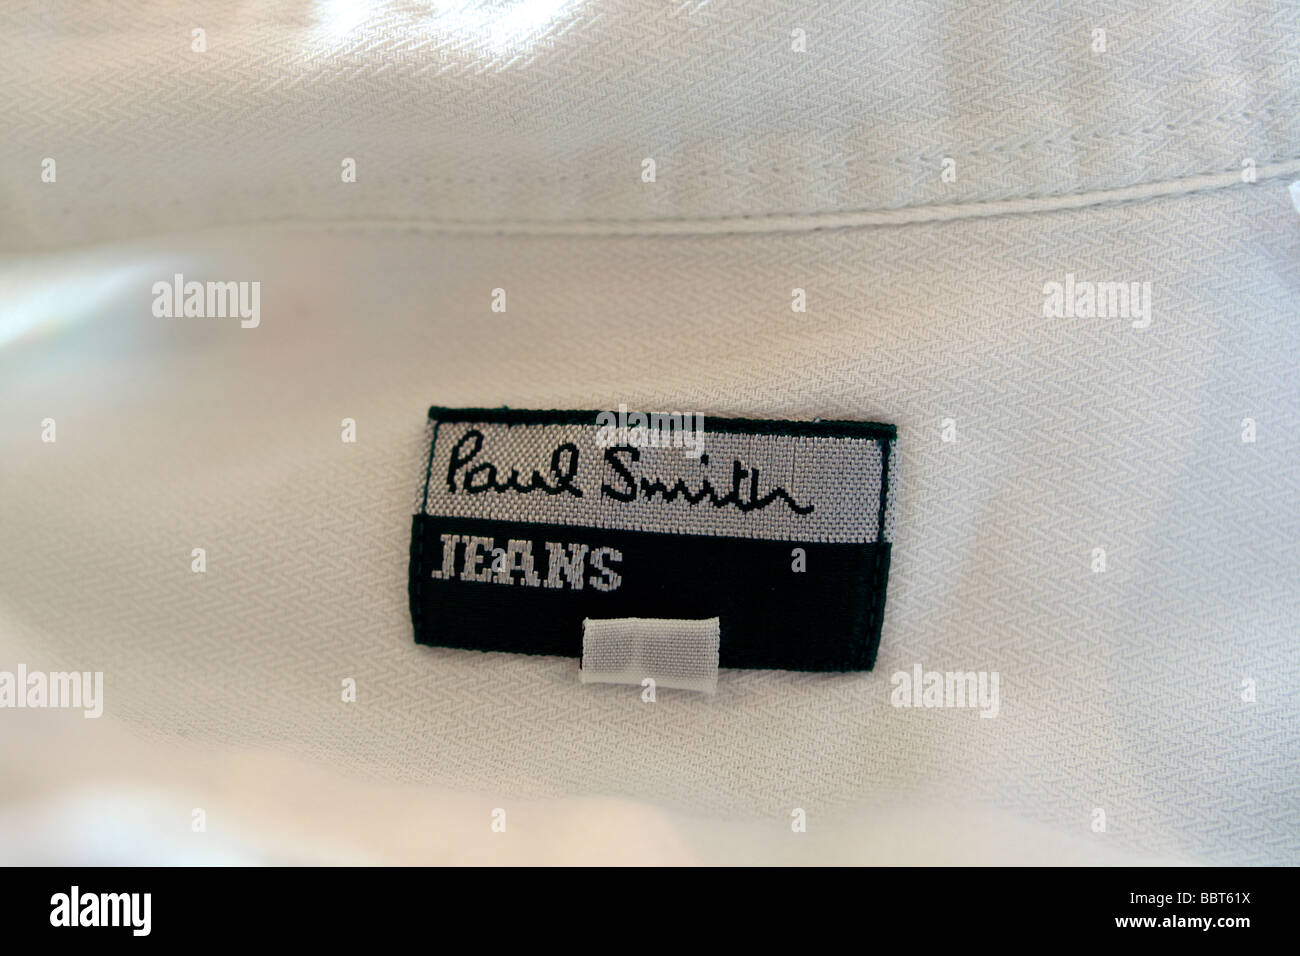 die Paul Smith Jeans-Label auf dem Hemd Stockfoto